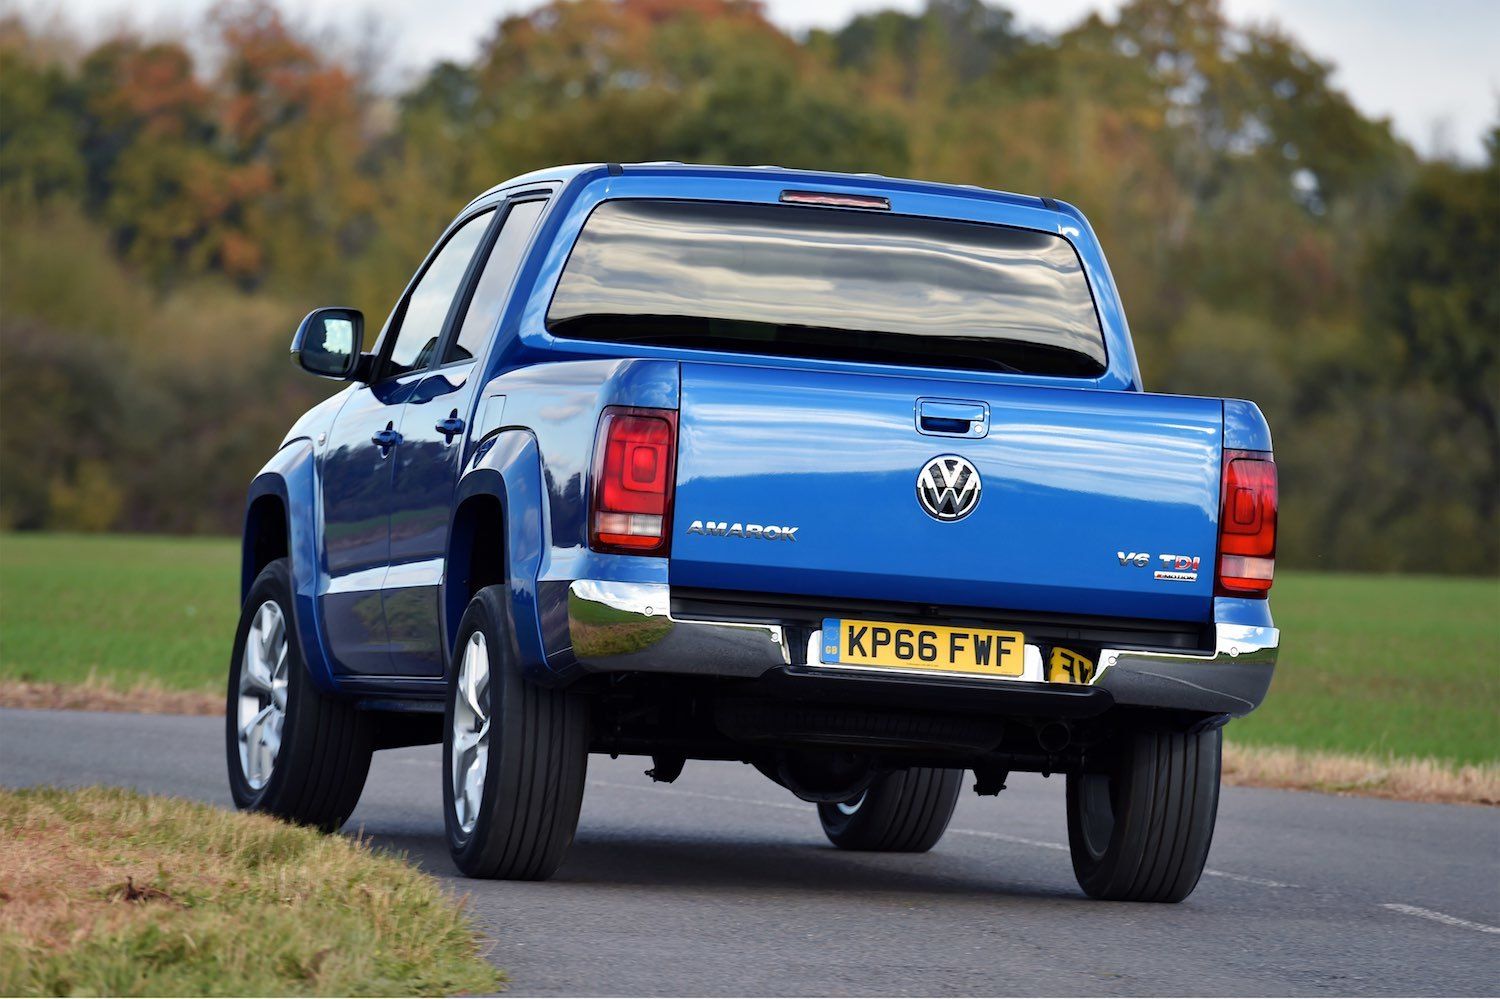 Neil Lyndon reviews the latest Volkswagen Amarok 15